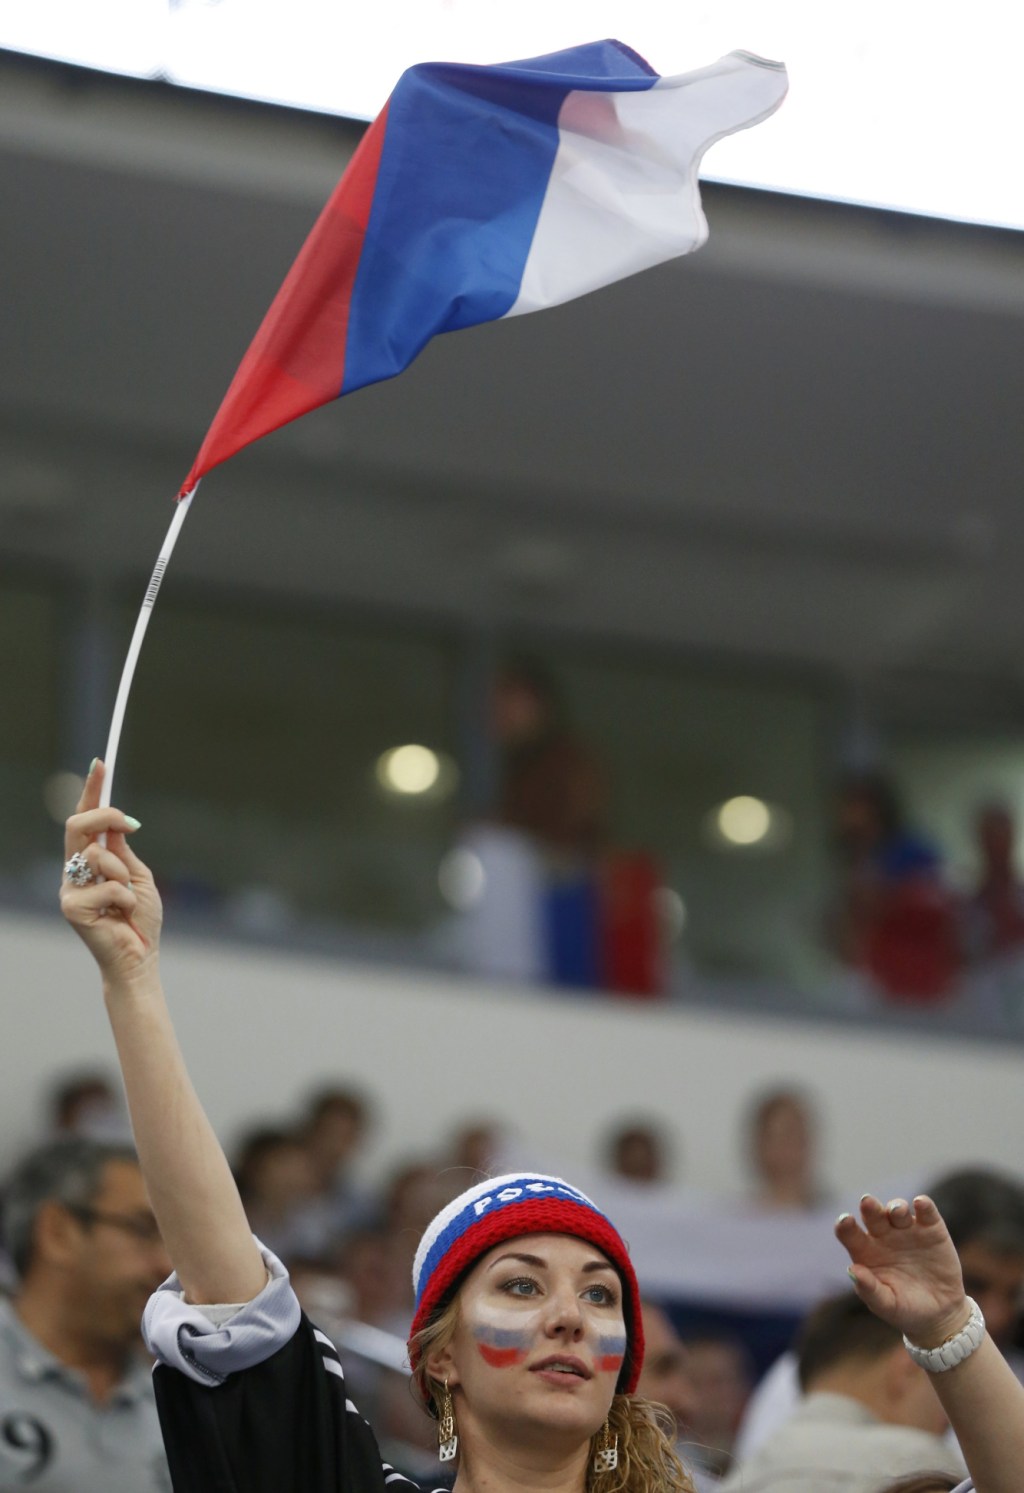 Хоккей в России: A Russia's supporter celebrates her team фото (photo)